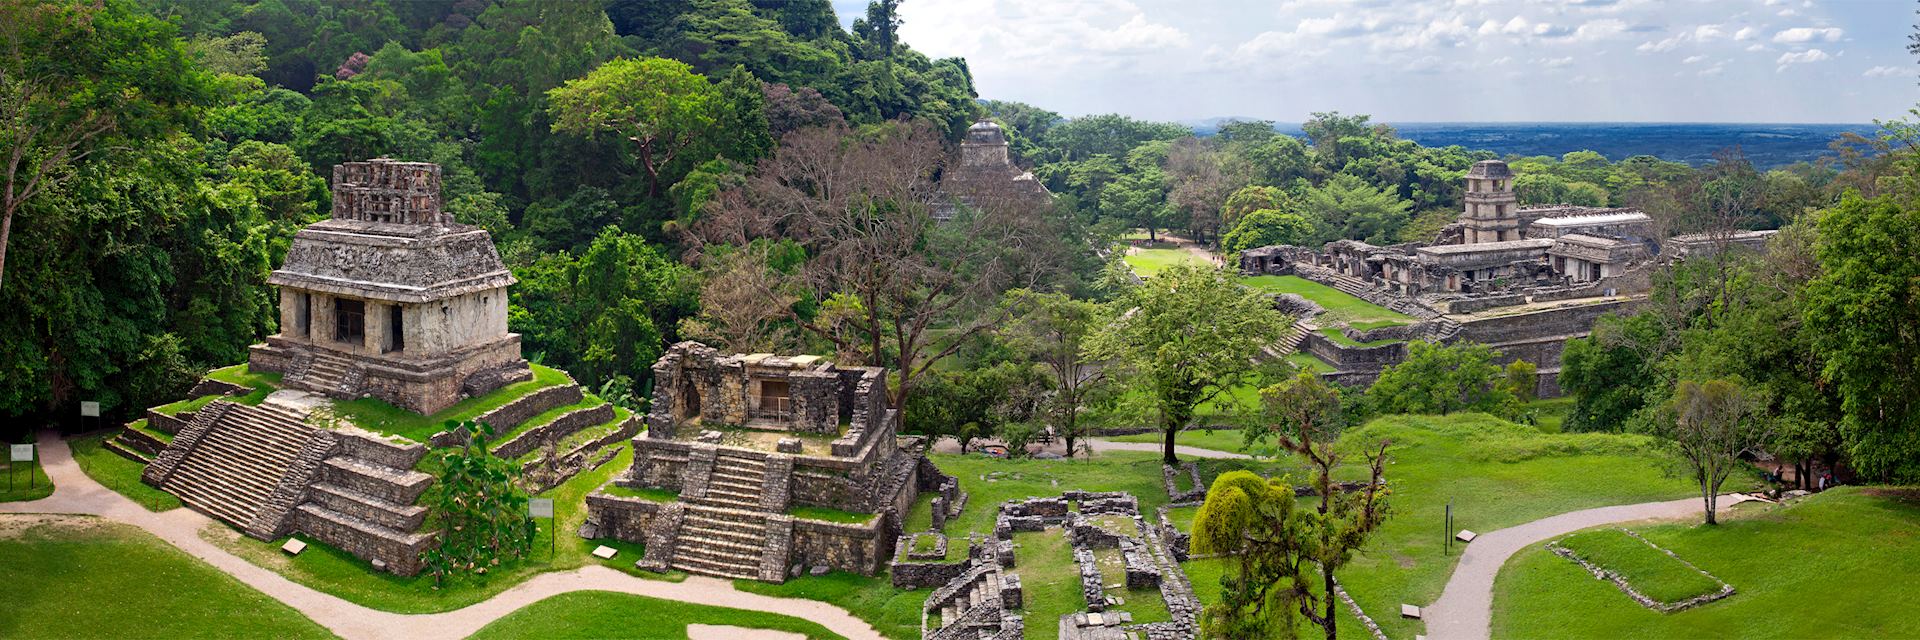 Maya ruins in Palenque